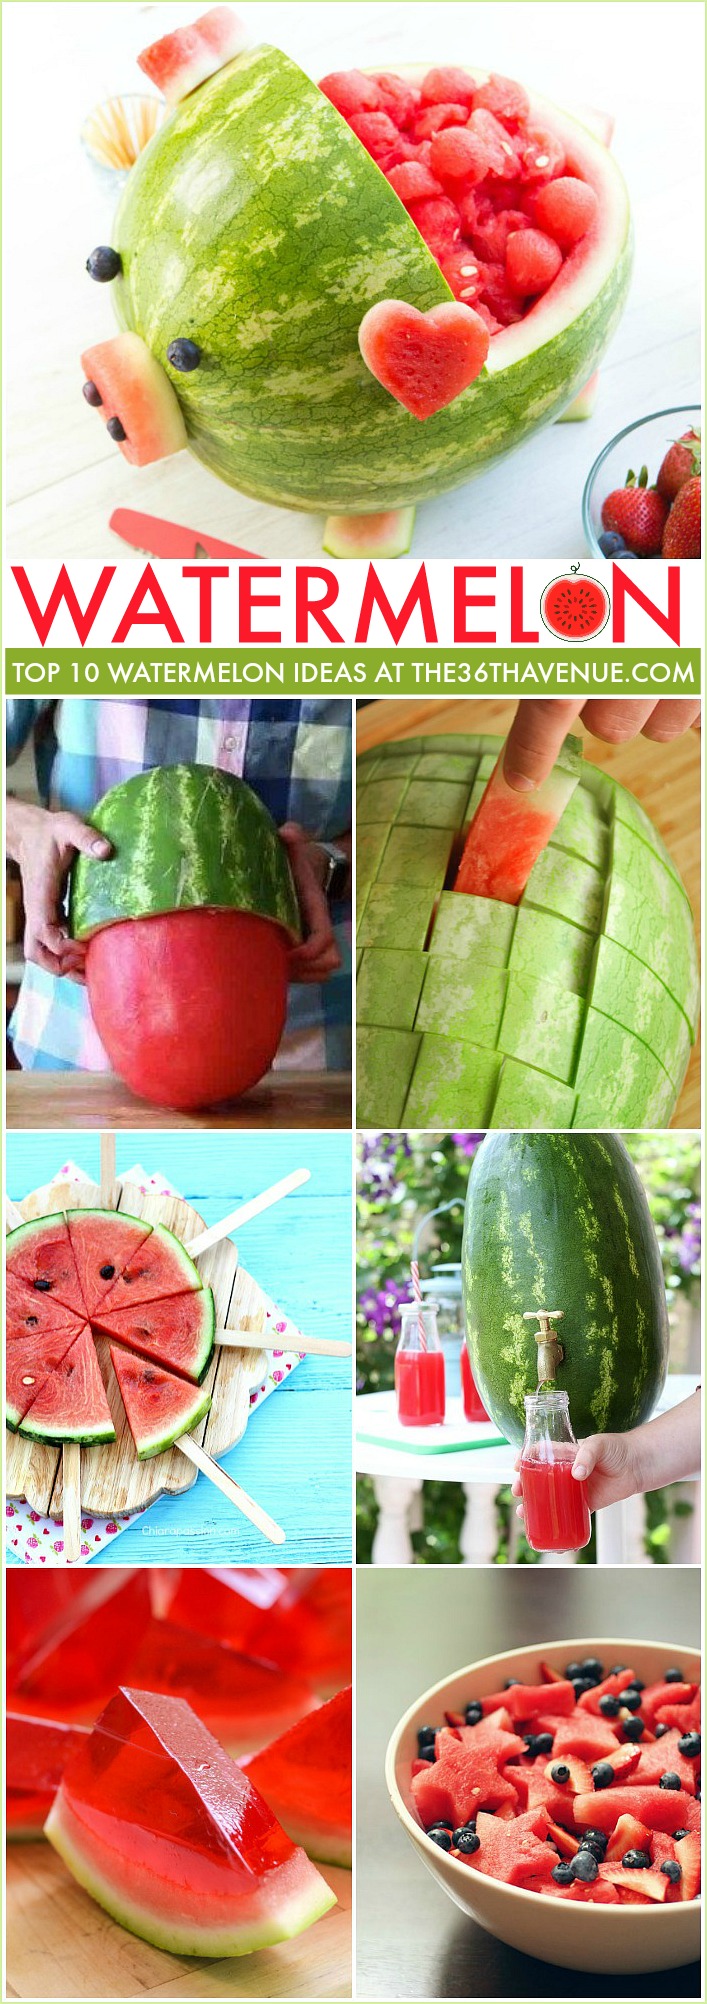 Top 10 Watermelon Ideas the36thavenue.com